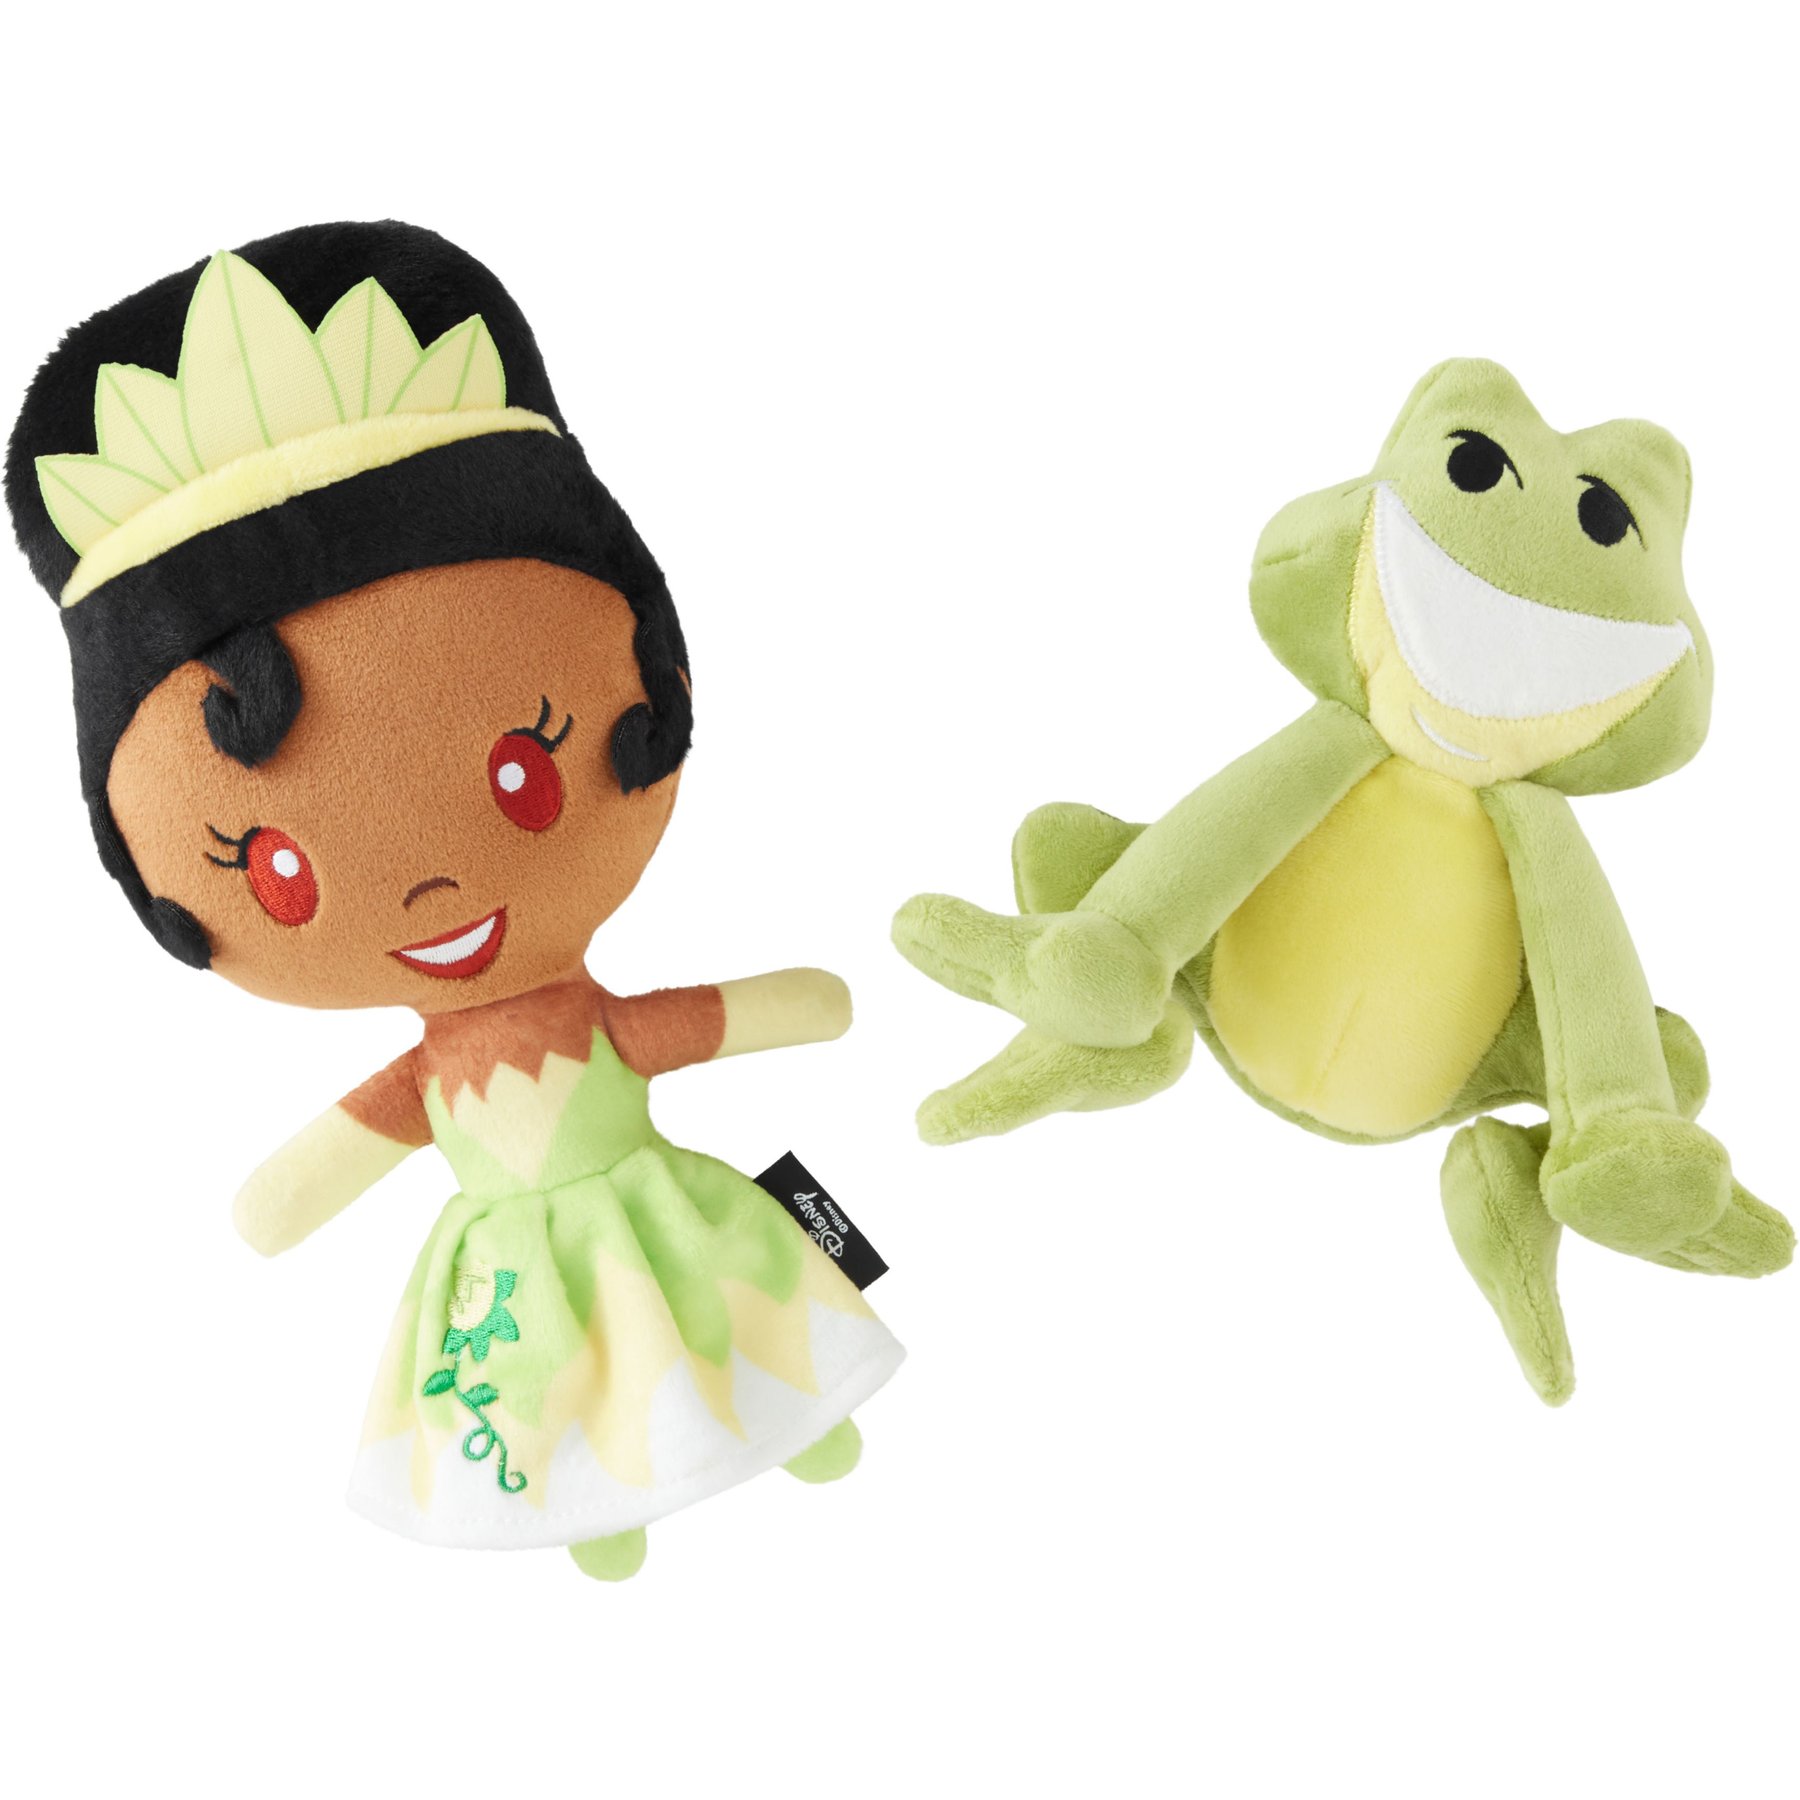 Princess Tiana soft Plush doll, Got this from disney store …